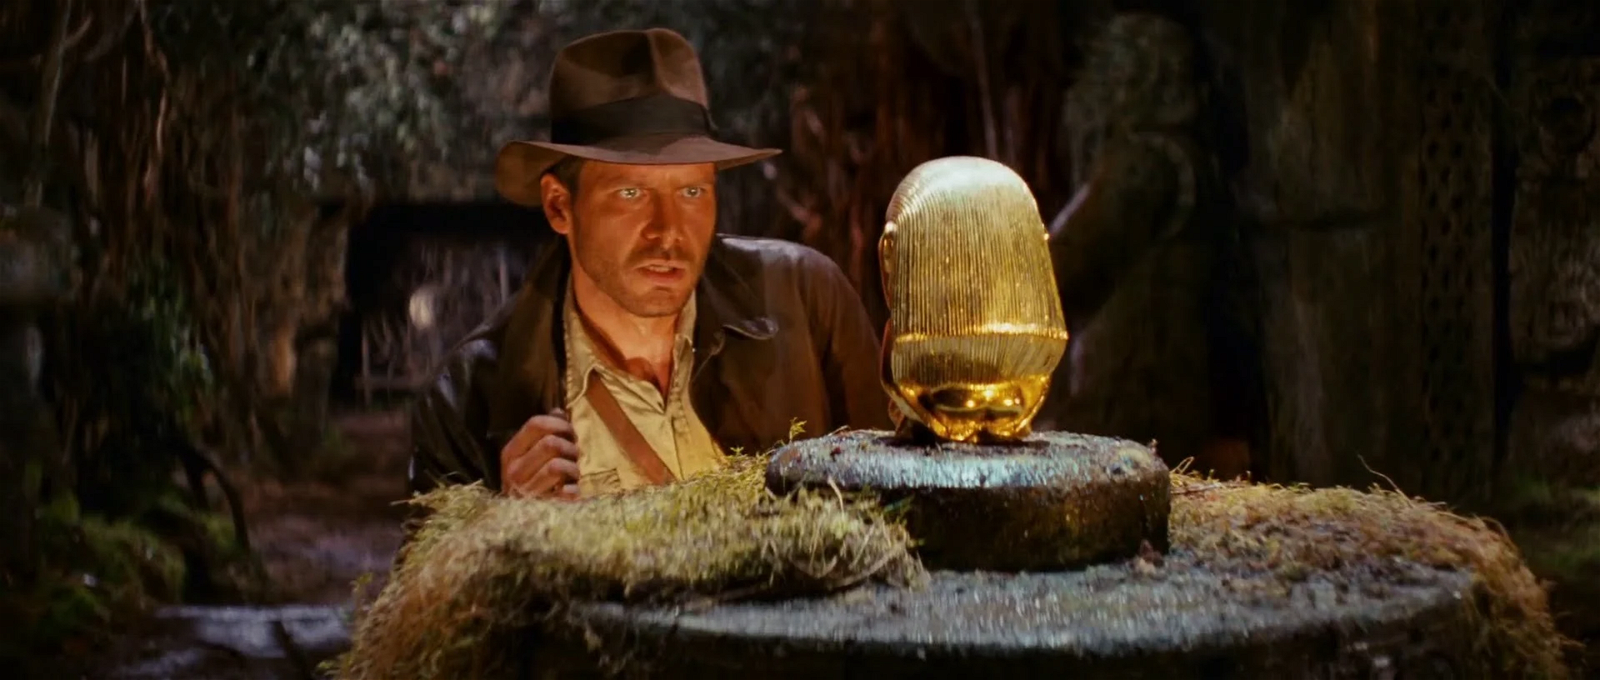 Todd Howard's Indiana Jones is based on his favorite movie, Raiders of the Lost Ark